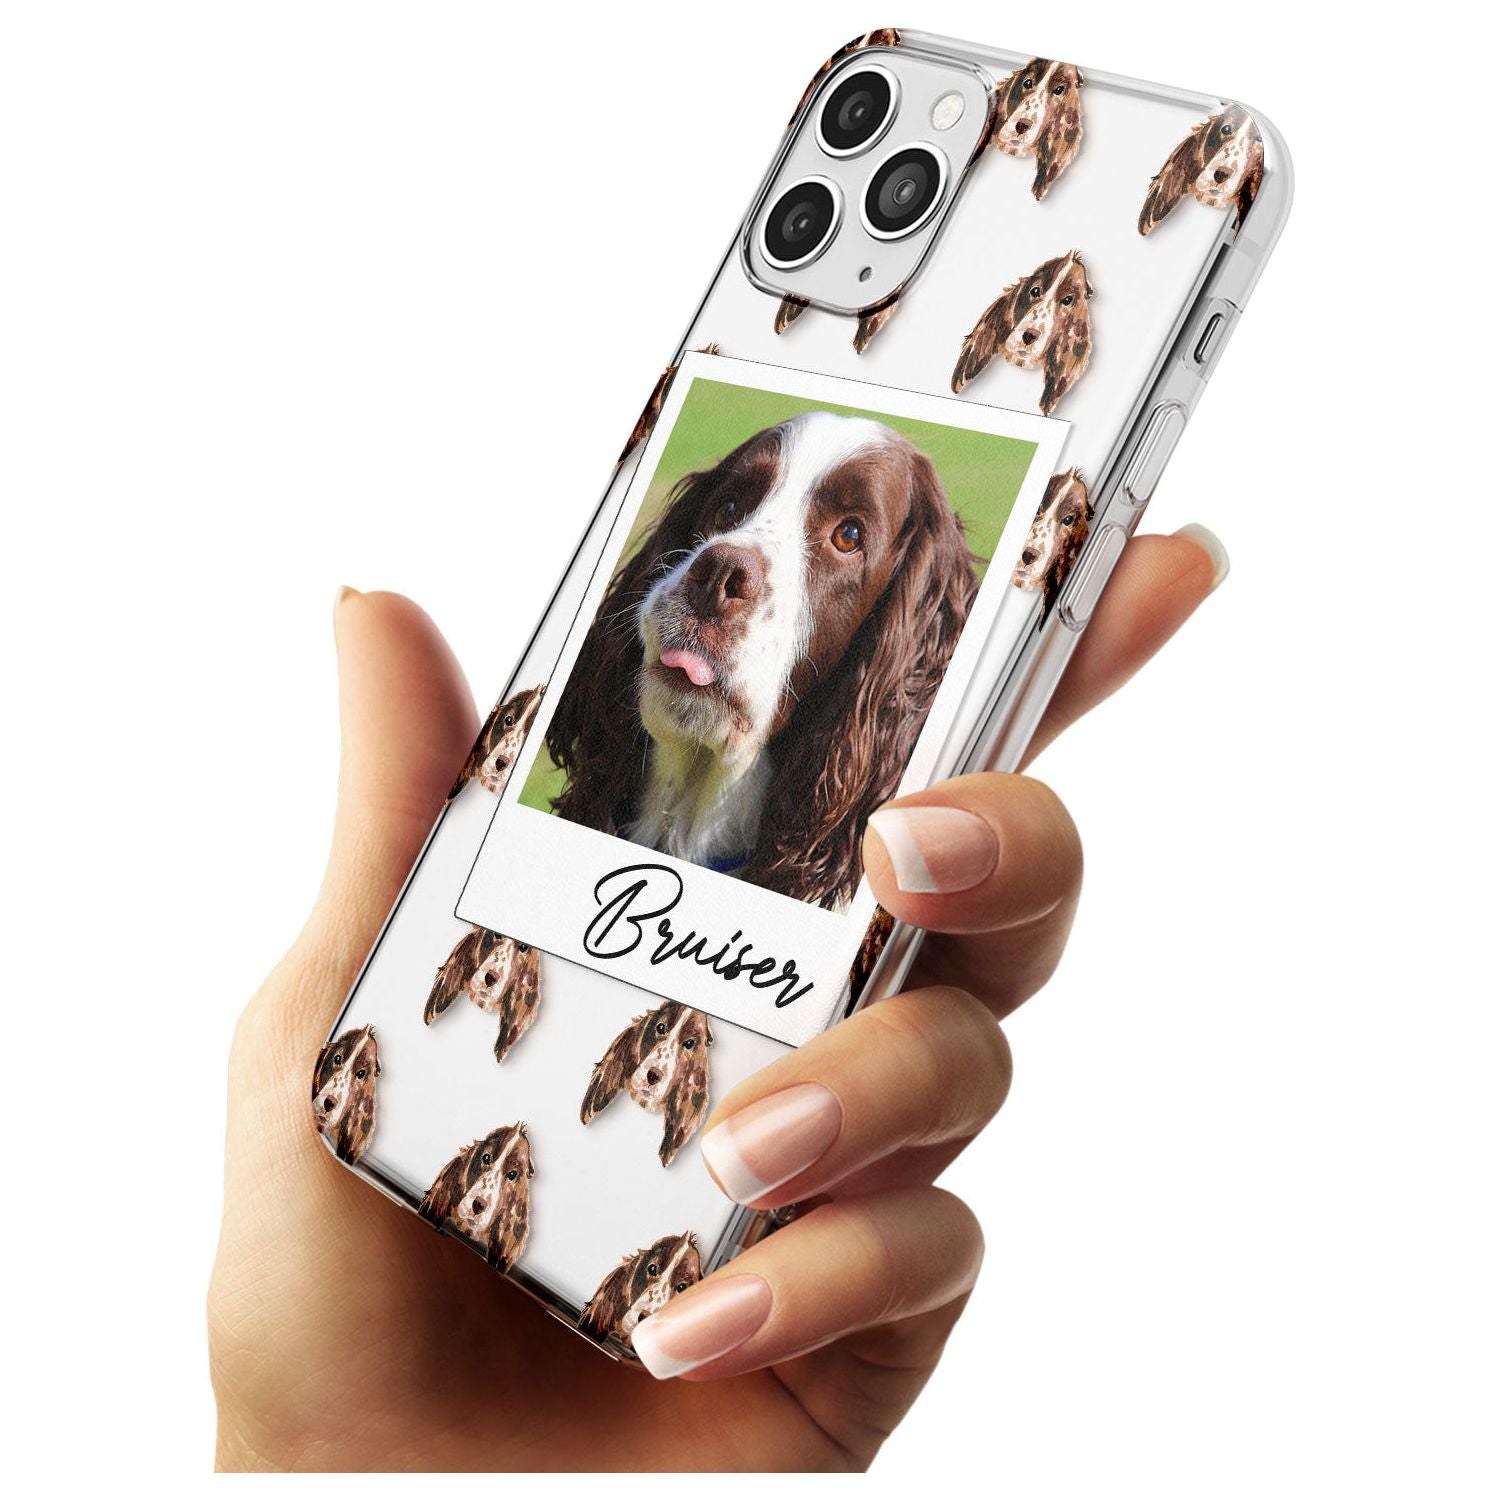 Springer Spaniel - Custom Dog Photo Black Impact Phone Case for iPhone 11 Pro Max